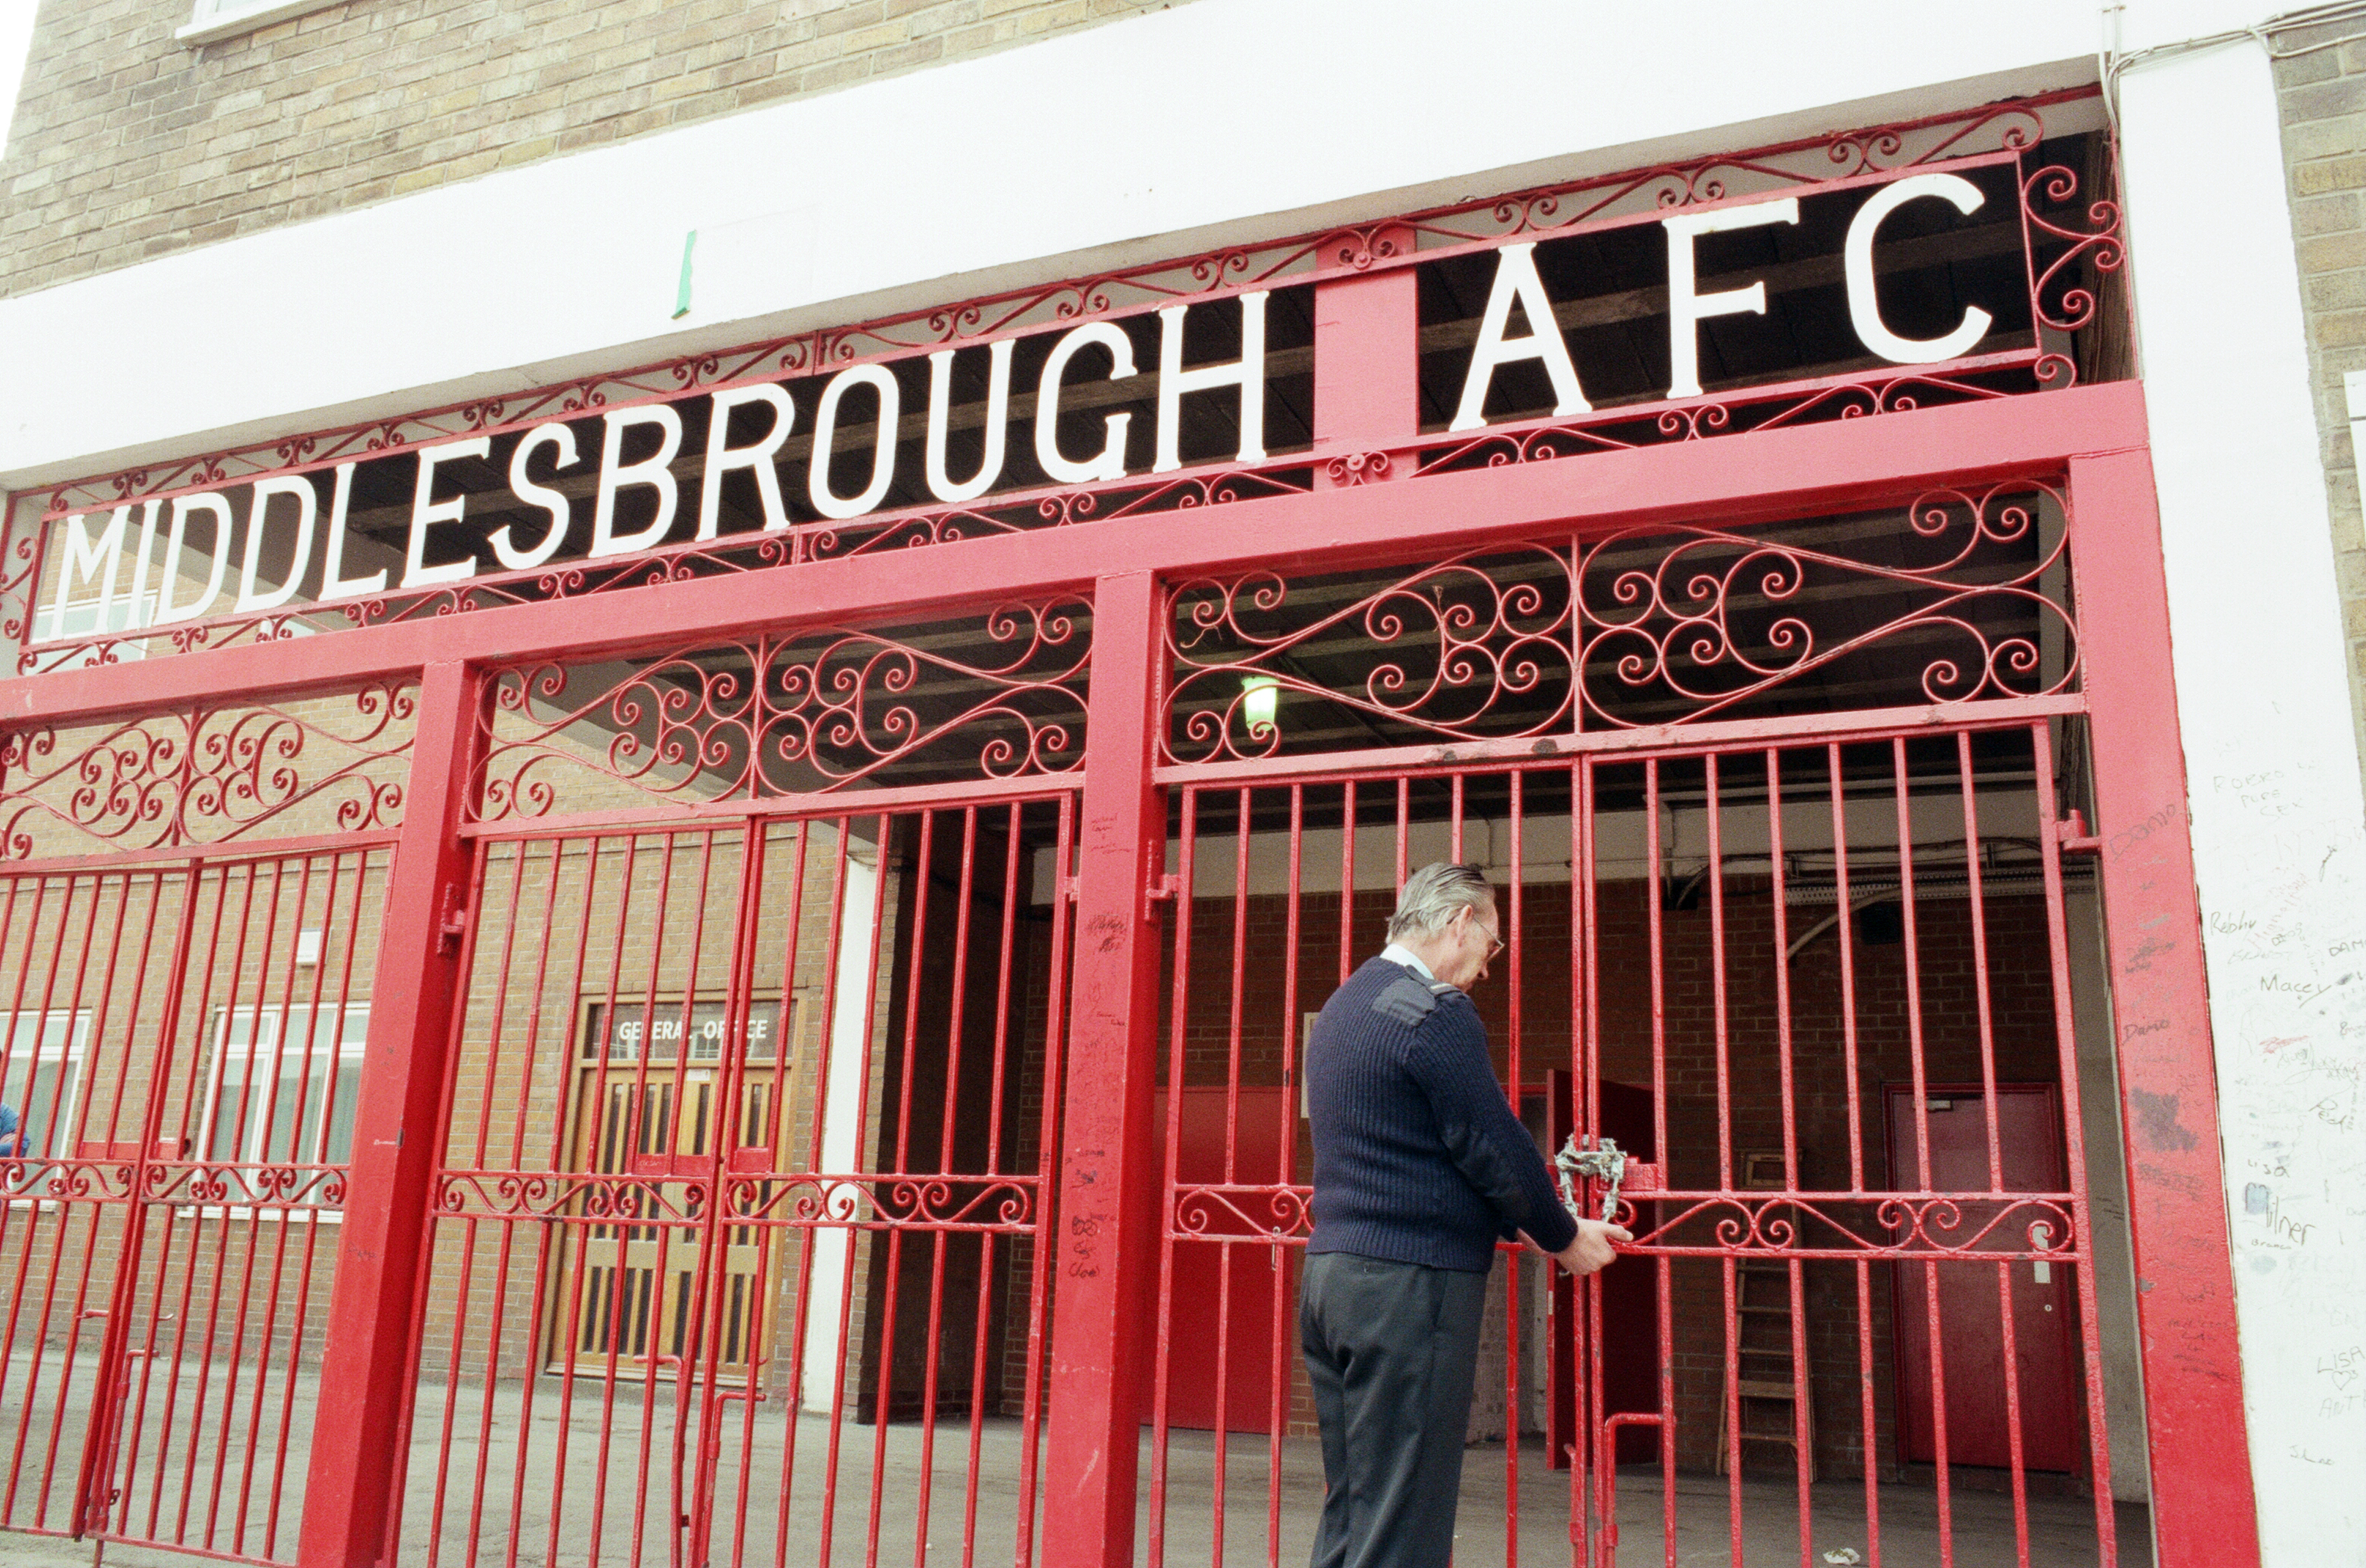 Middlesbrough spielte 92 Jahre lang im Ayresome Park